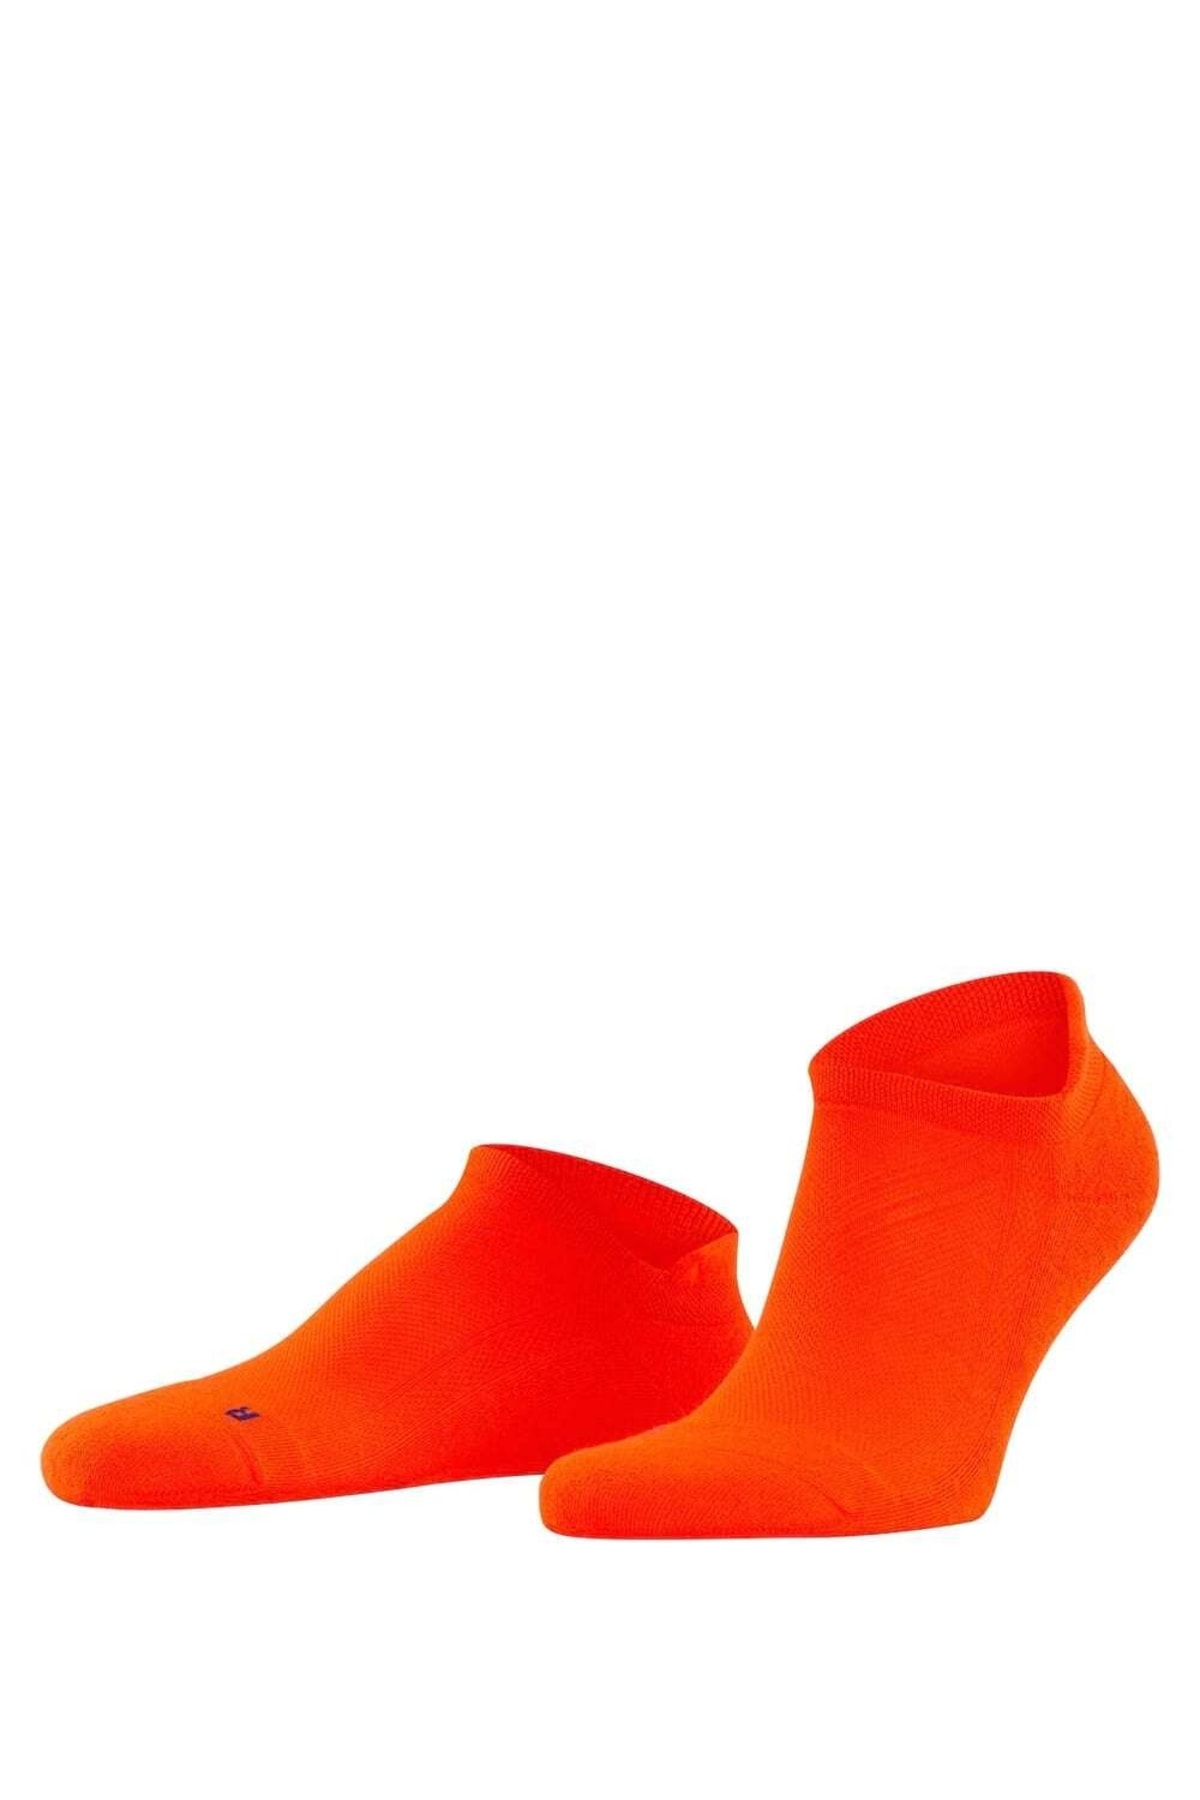 FALKE Socken Orange Casual Fast ausverkauft